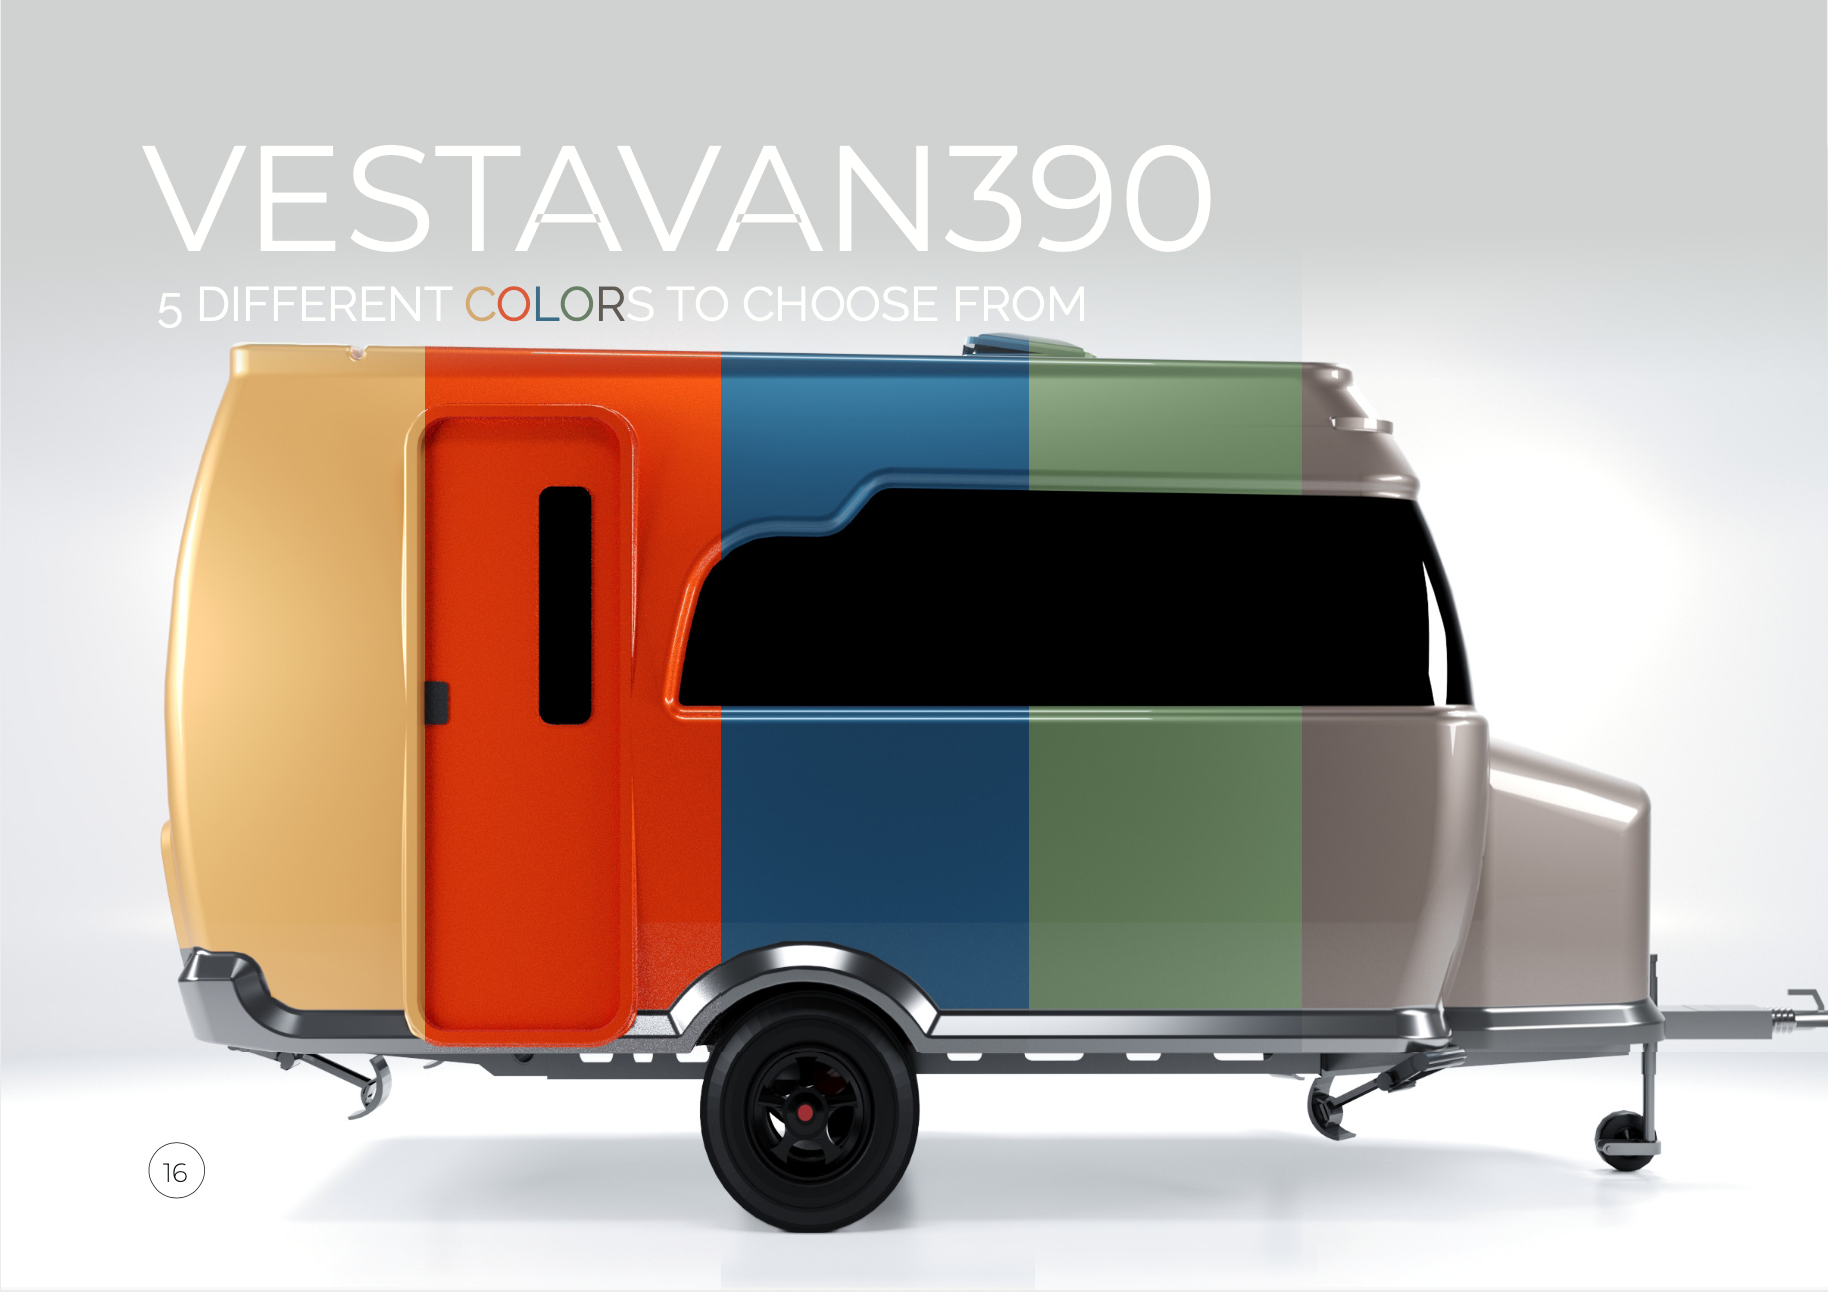 Camper Caravan Zubehör Angebotspreis  CON-21A845 - Sonnenschutz für  Wohnwagen Creta Größe 5 480-520 Caravan Conver 21A.845 - CONVER